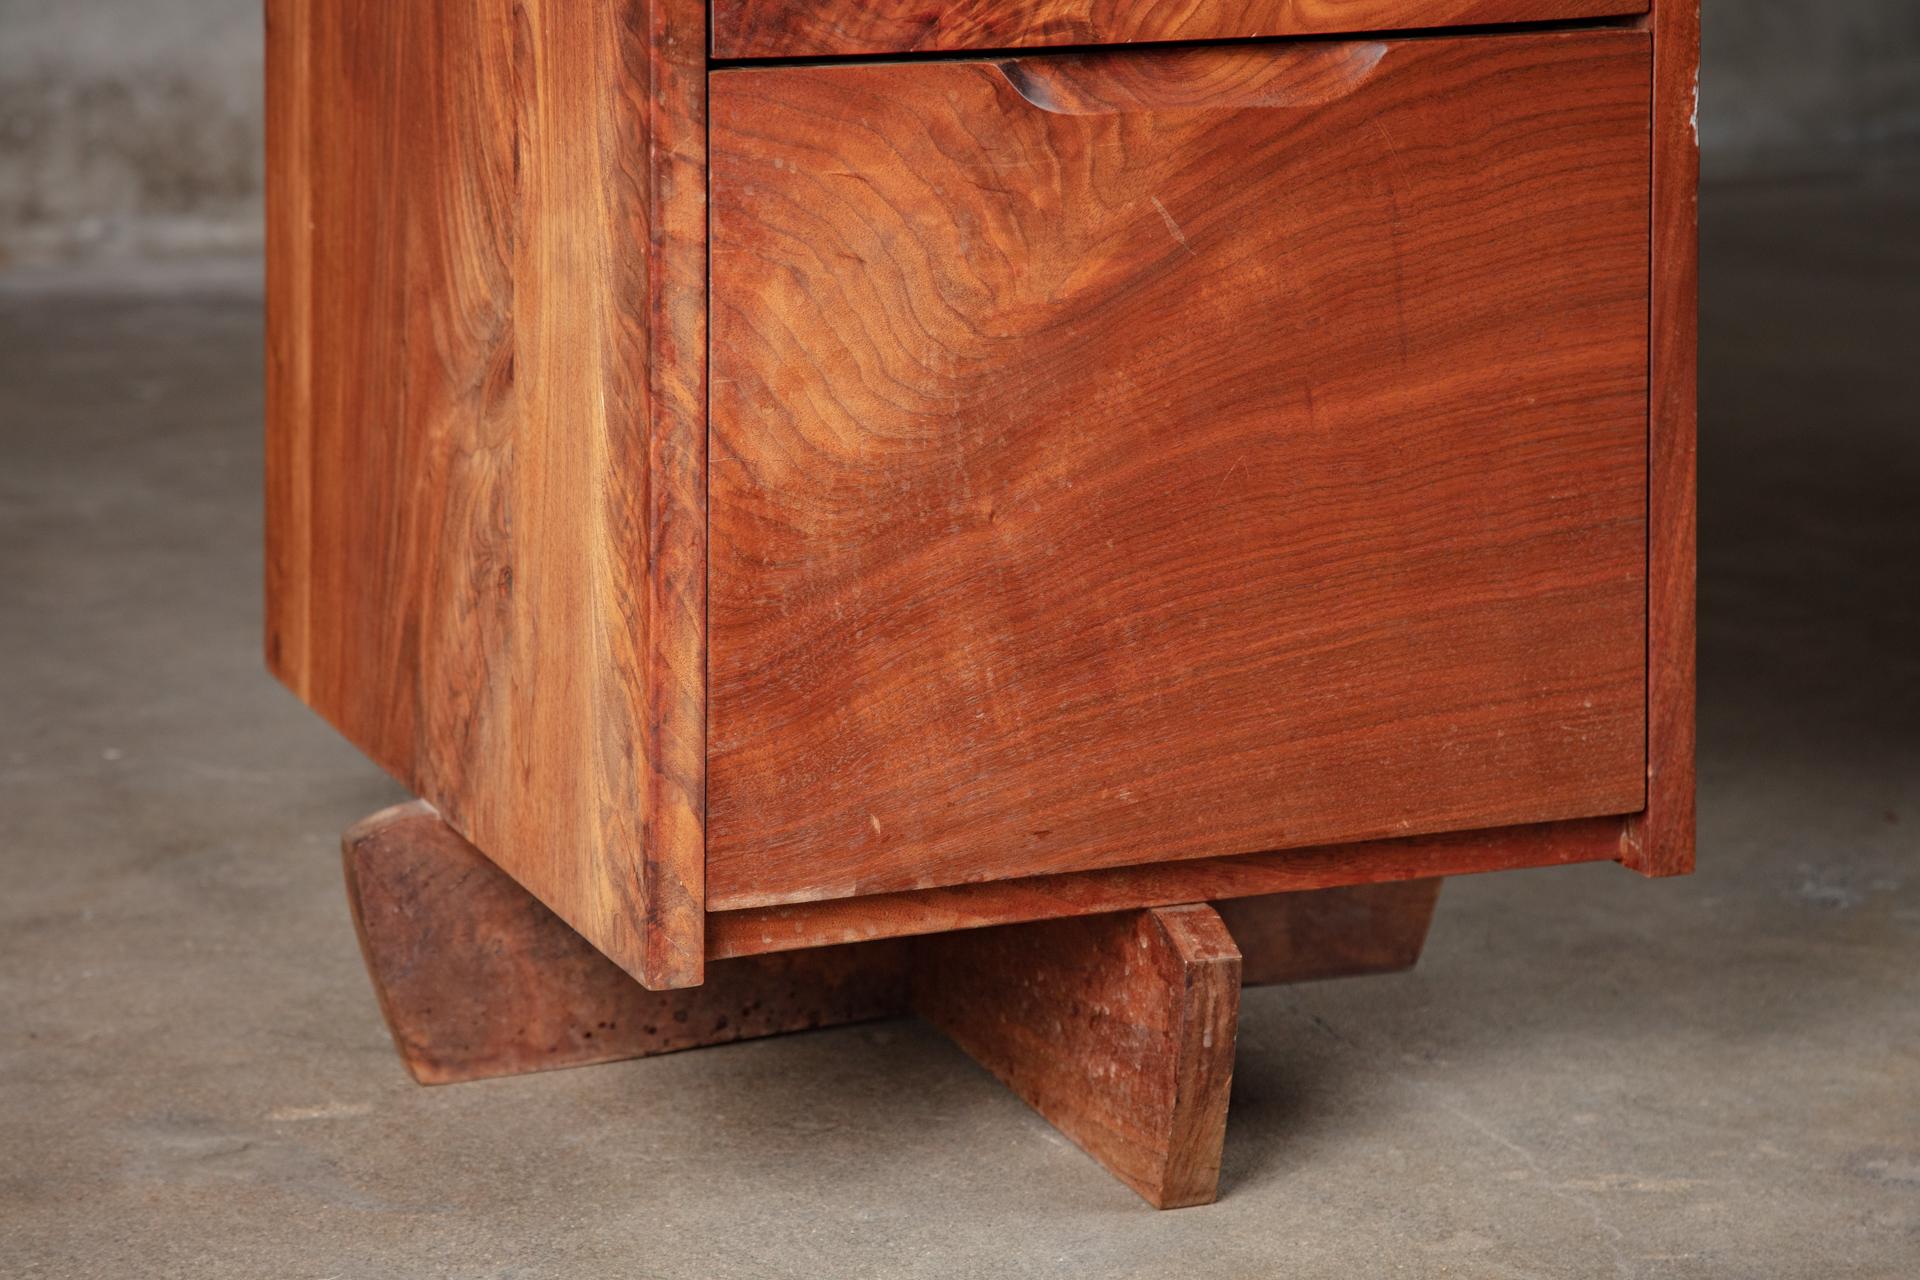 Geroge Nakashima New Hope, Pennsylvania double pedestal desk in walnut and rosewood.